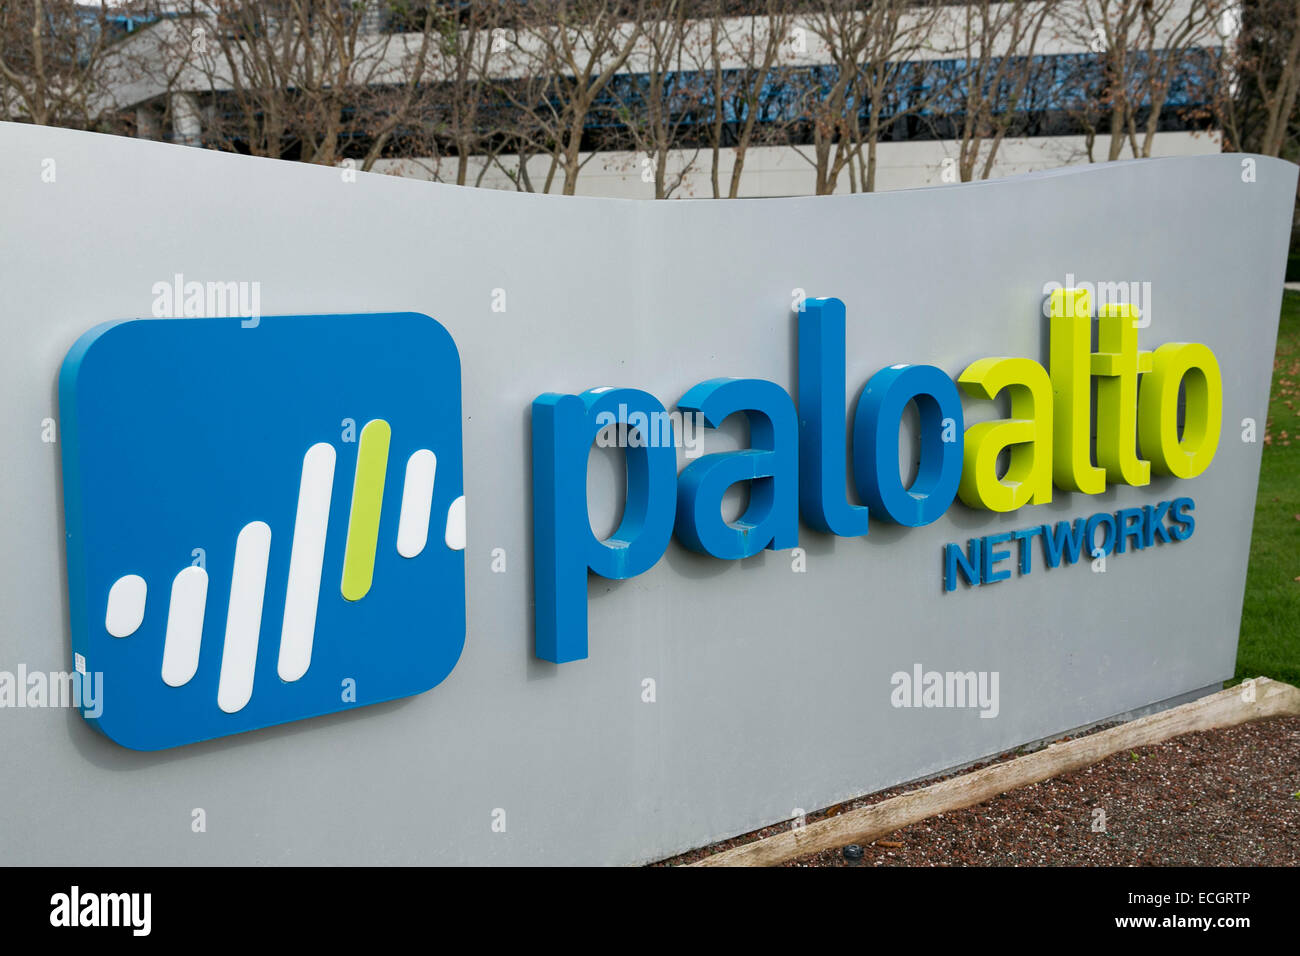 The headquarters of Palo Alto Networks. Stock Photo